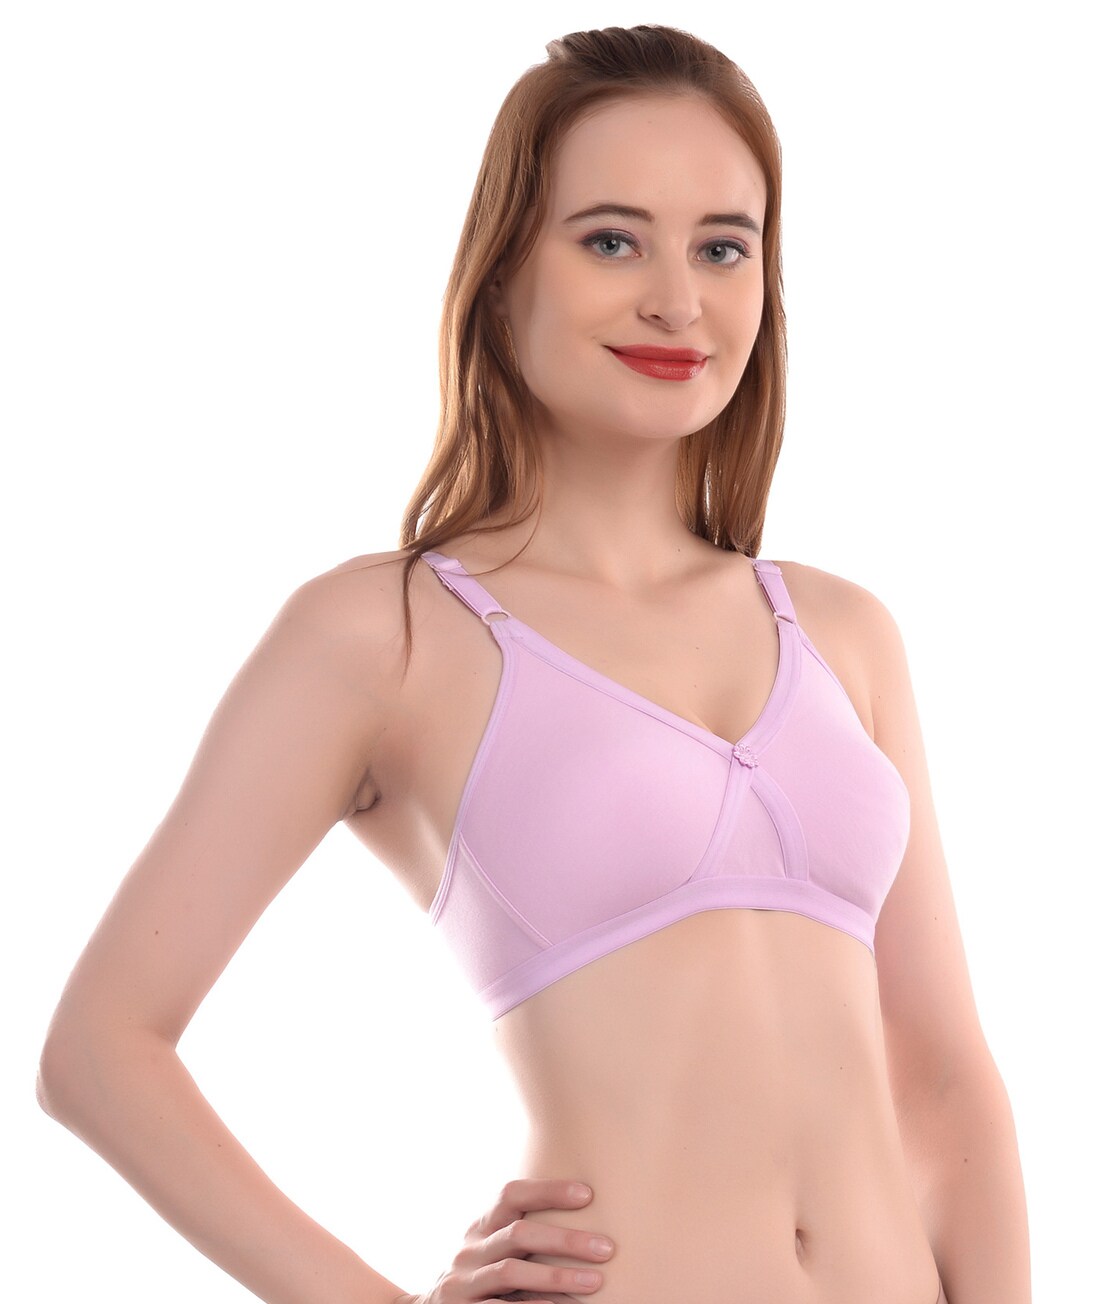 Buy Purple Bras for Women by VIRAL GIRL Online